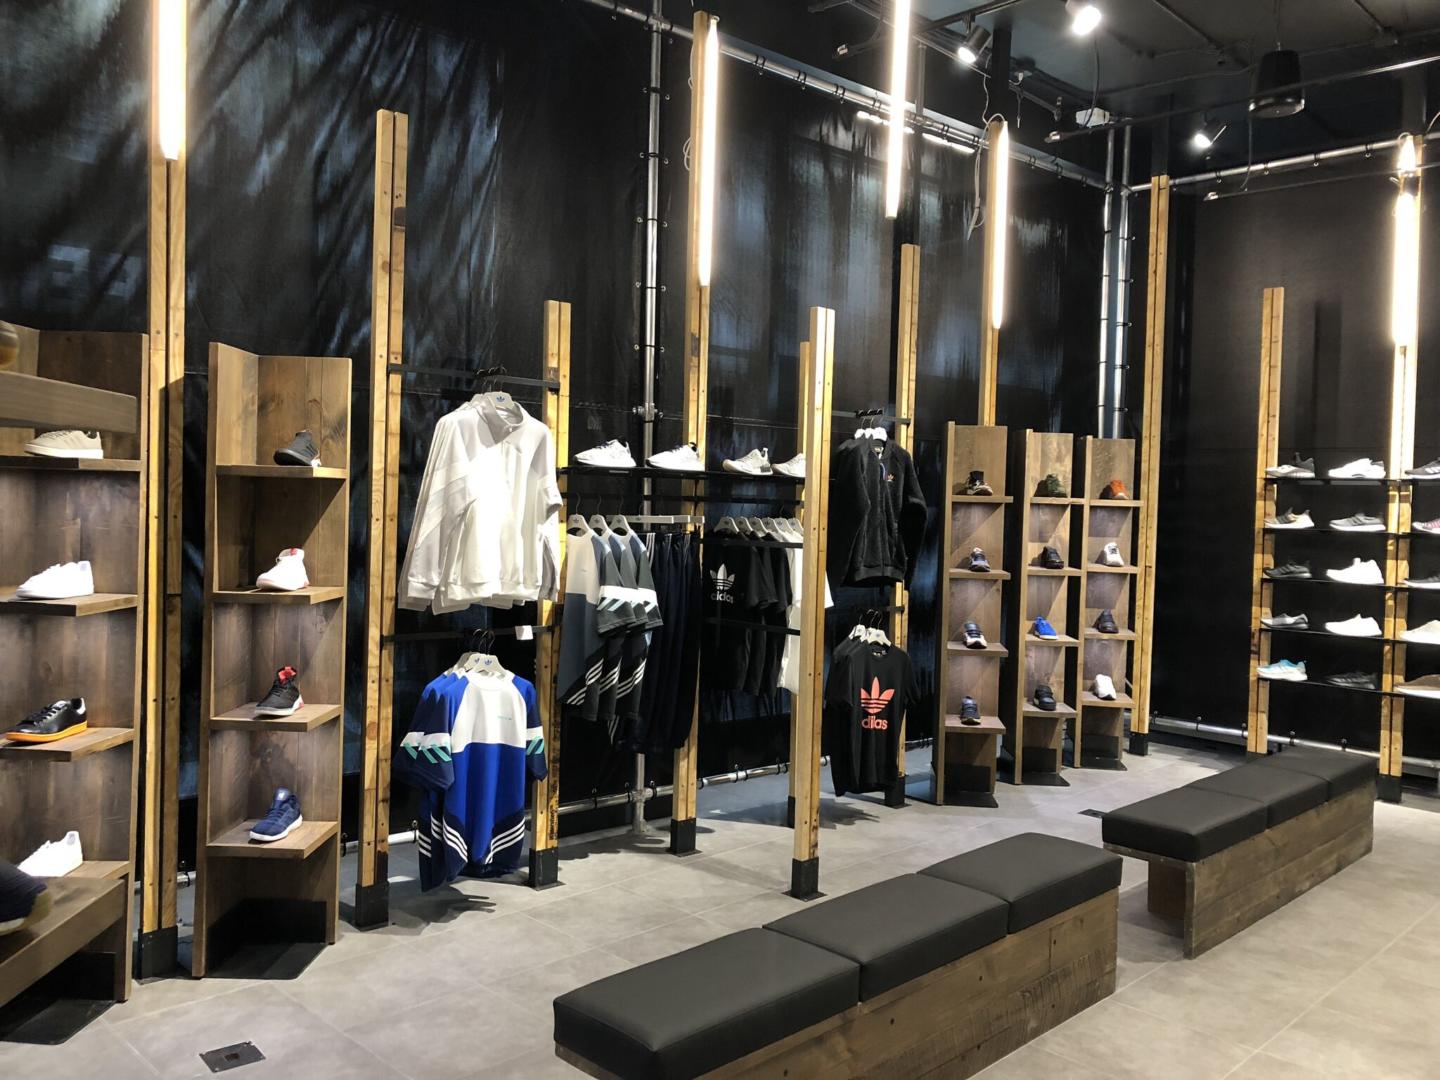 Benches and retail displays by Morgan Li at Adidas pop up shop 